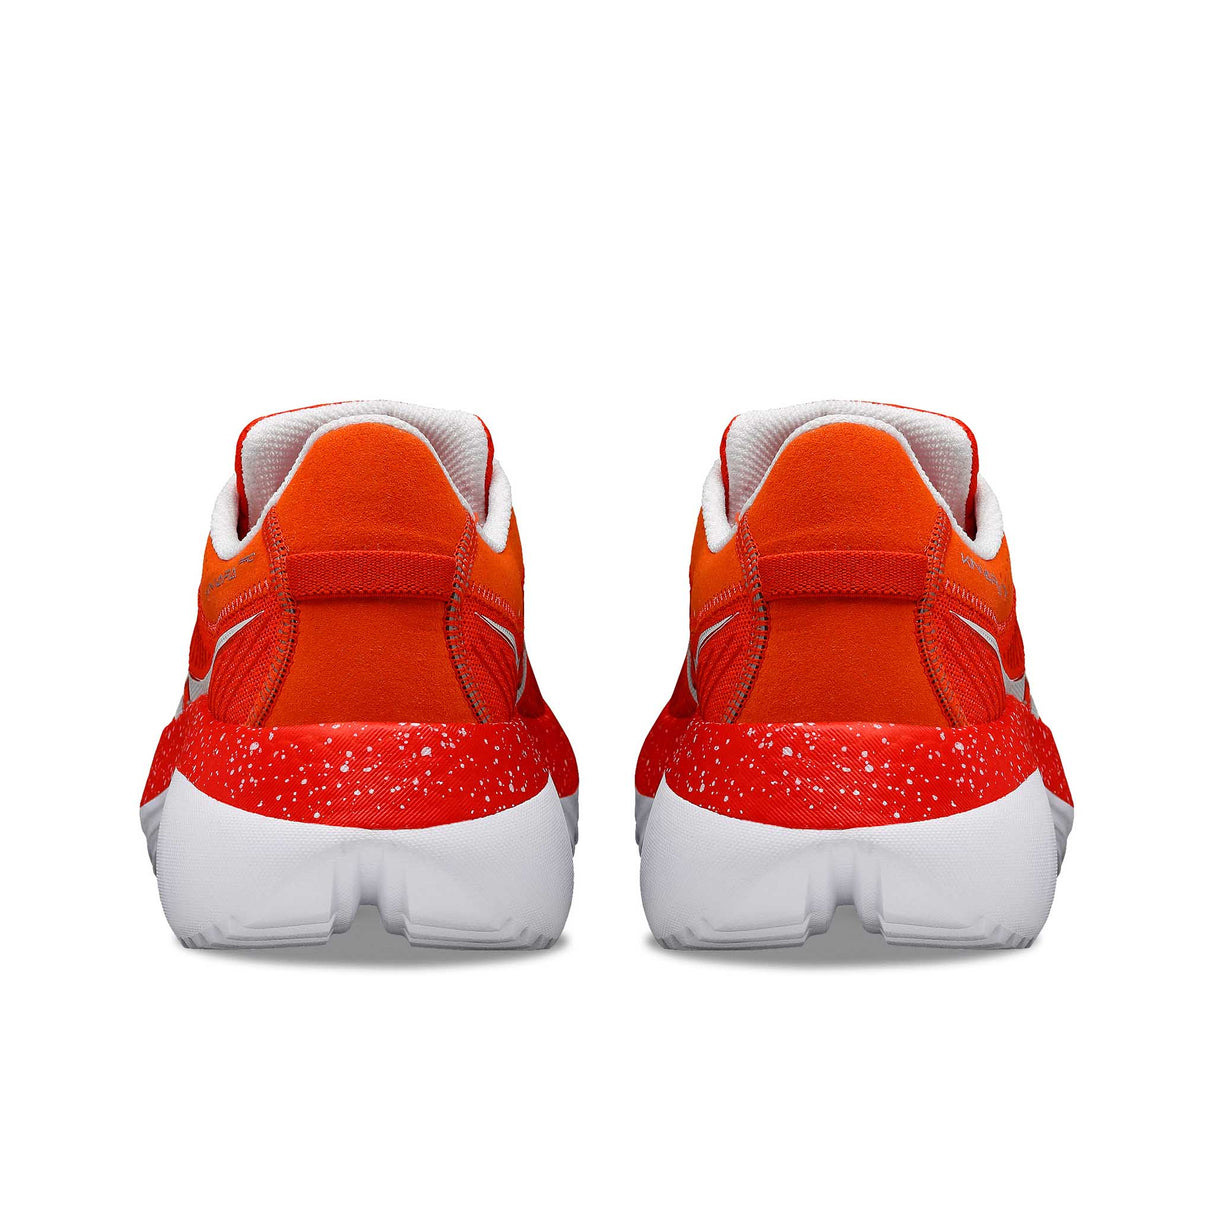 Saucony Kinvara Pro chaussures de course à pied femme talons  - infrared / fog